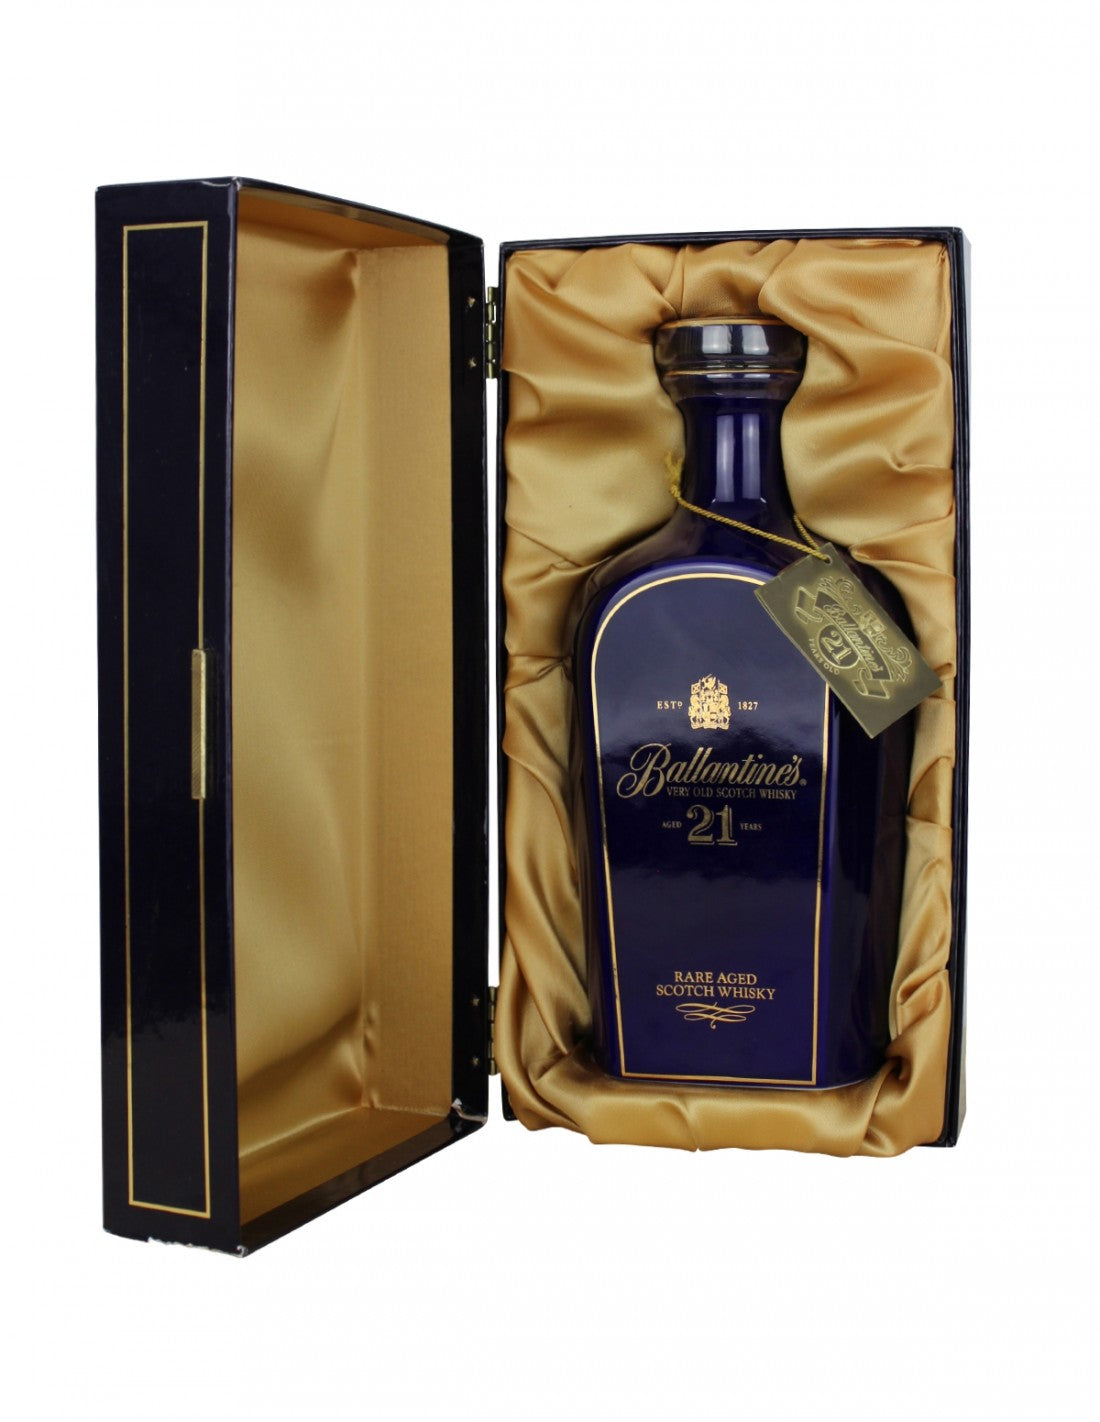 BUY] Ballantine's 21 Year Old Blue Decanter Rare Aged Scotch